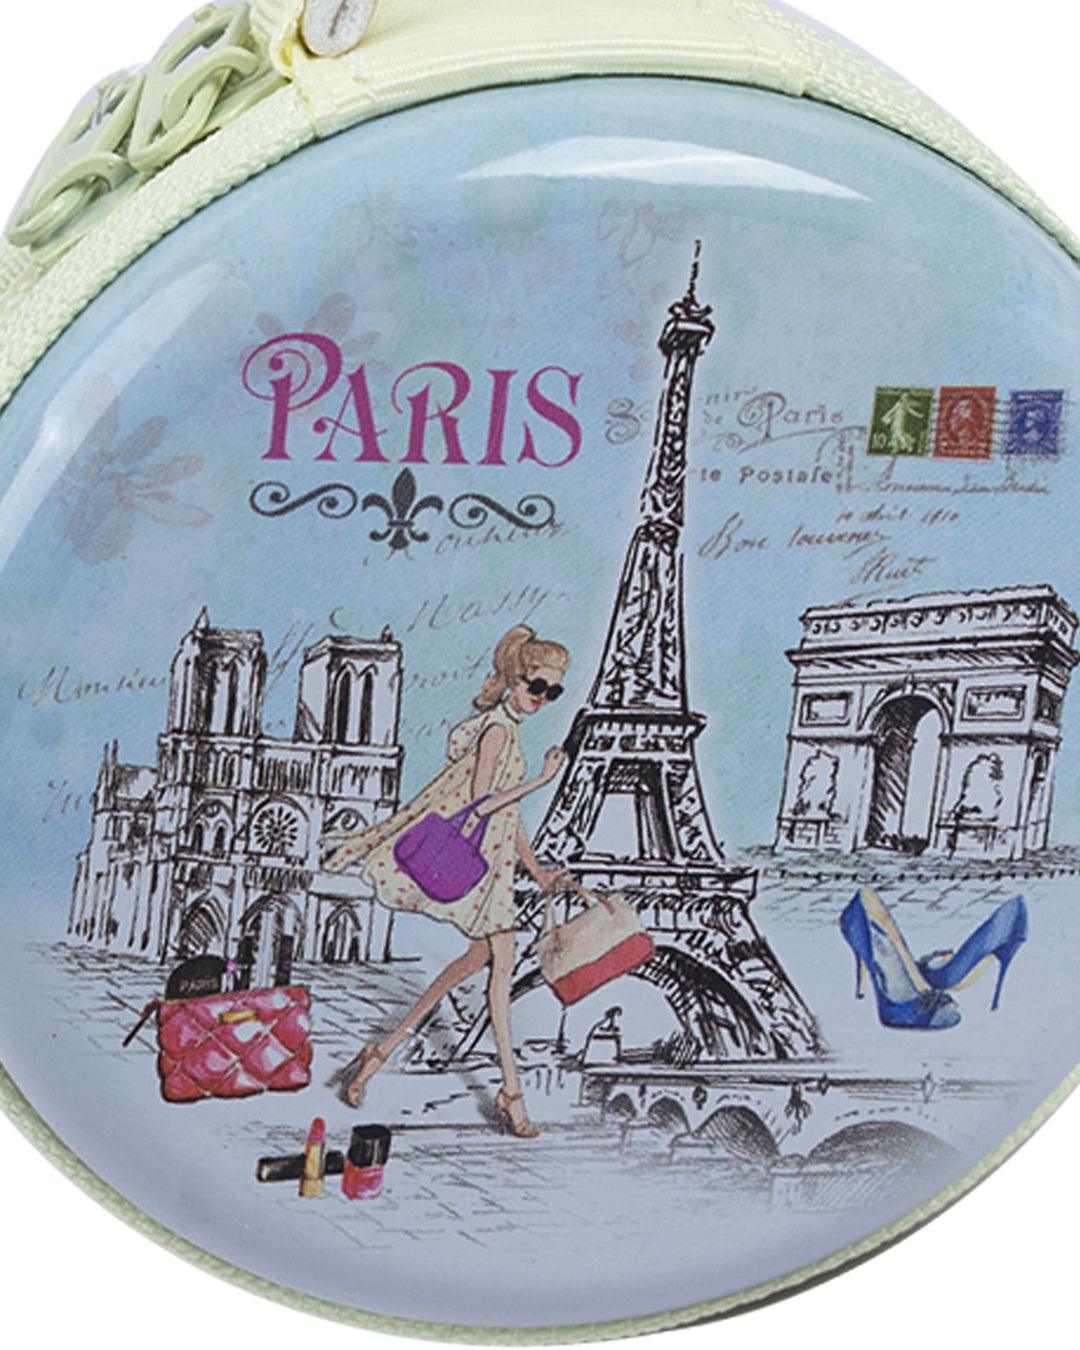 Donati Coin Pouch, Wallet, Eiffel Tower, Multicolour, Plastic - MARKET 99